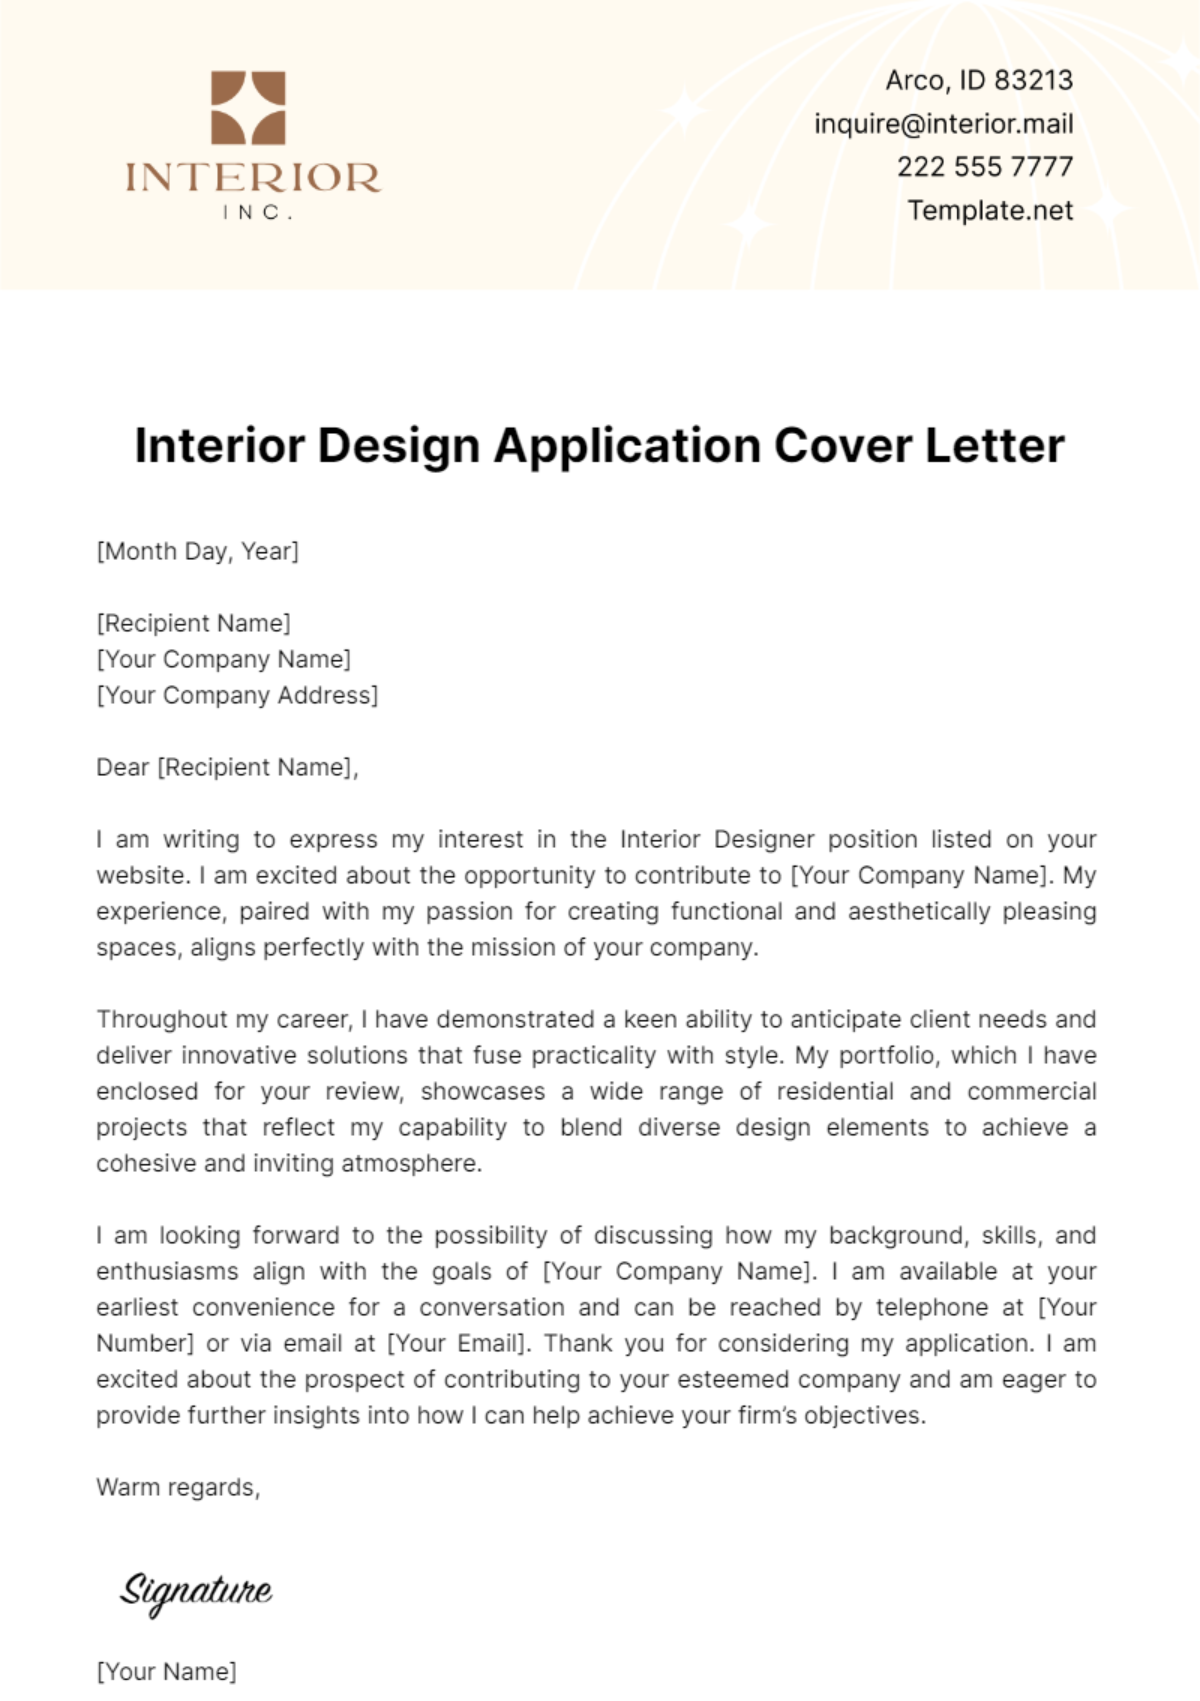 Interior Design Application Cover Letter Template